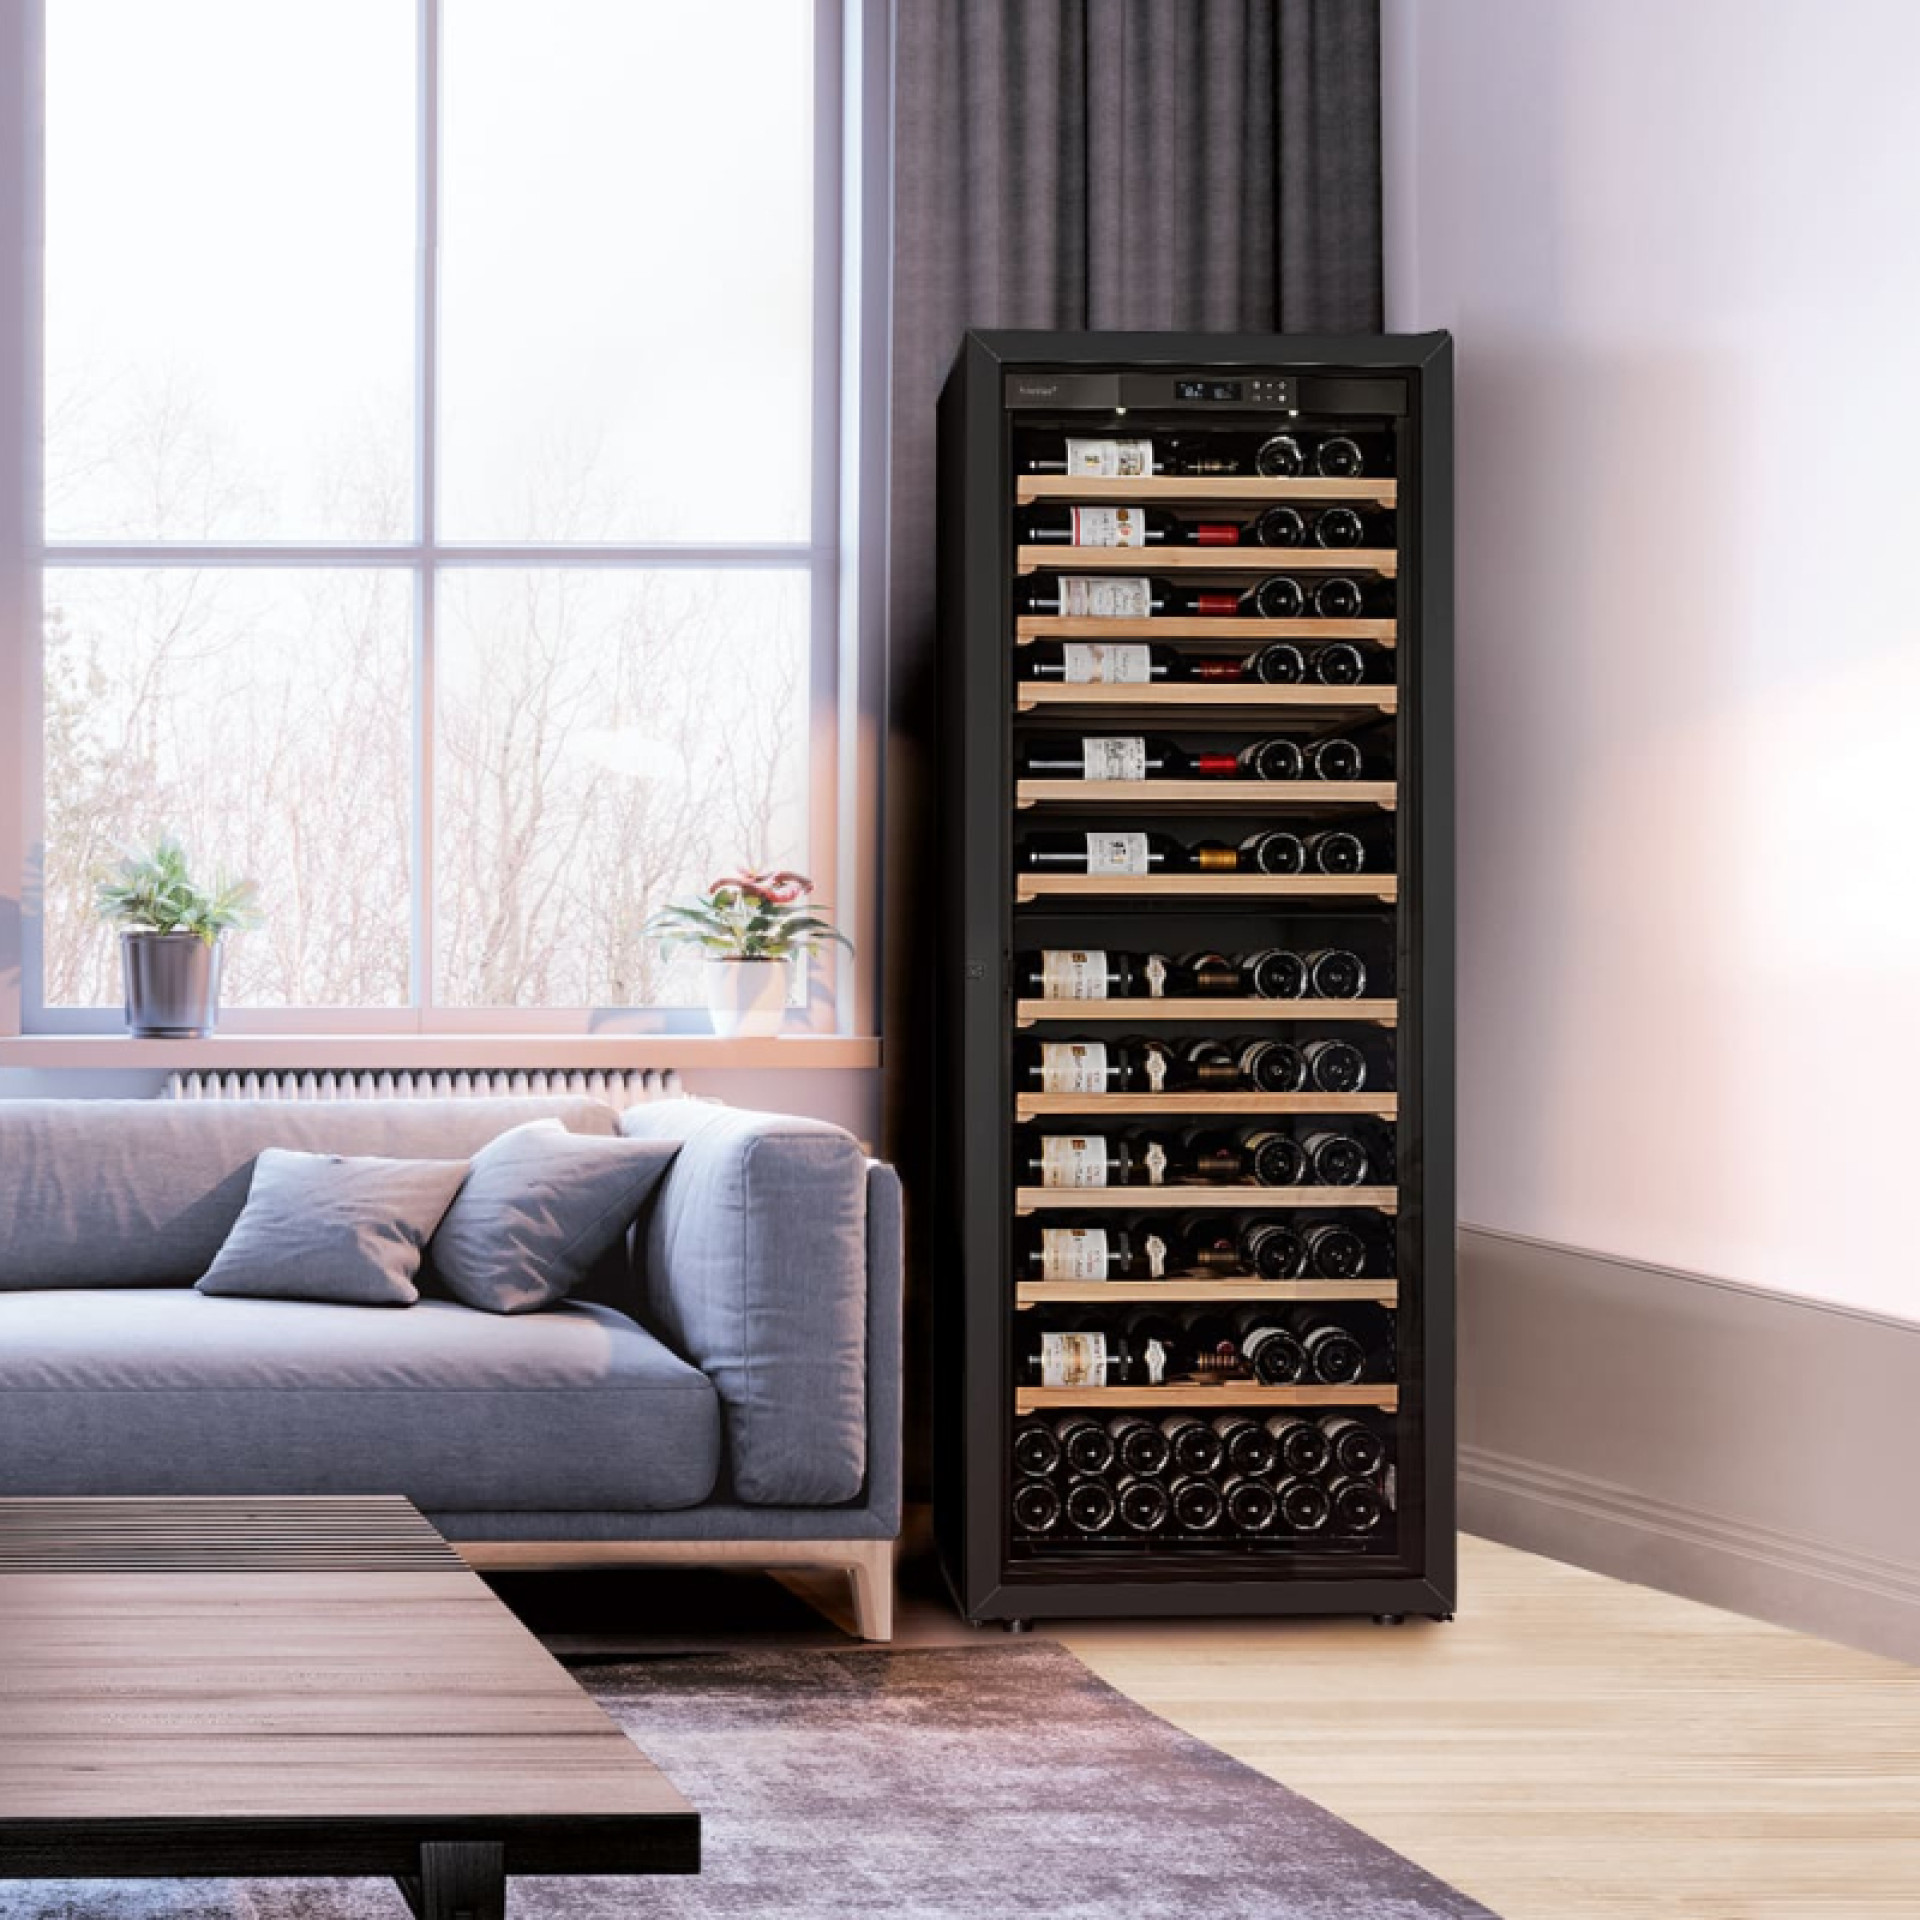 Wine maturing cabinet